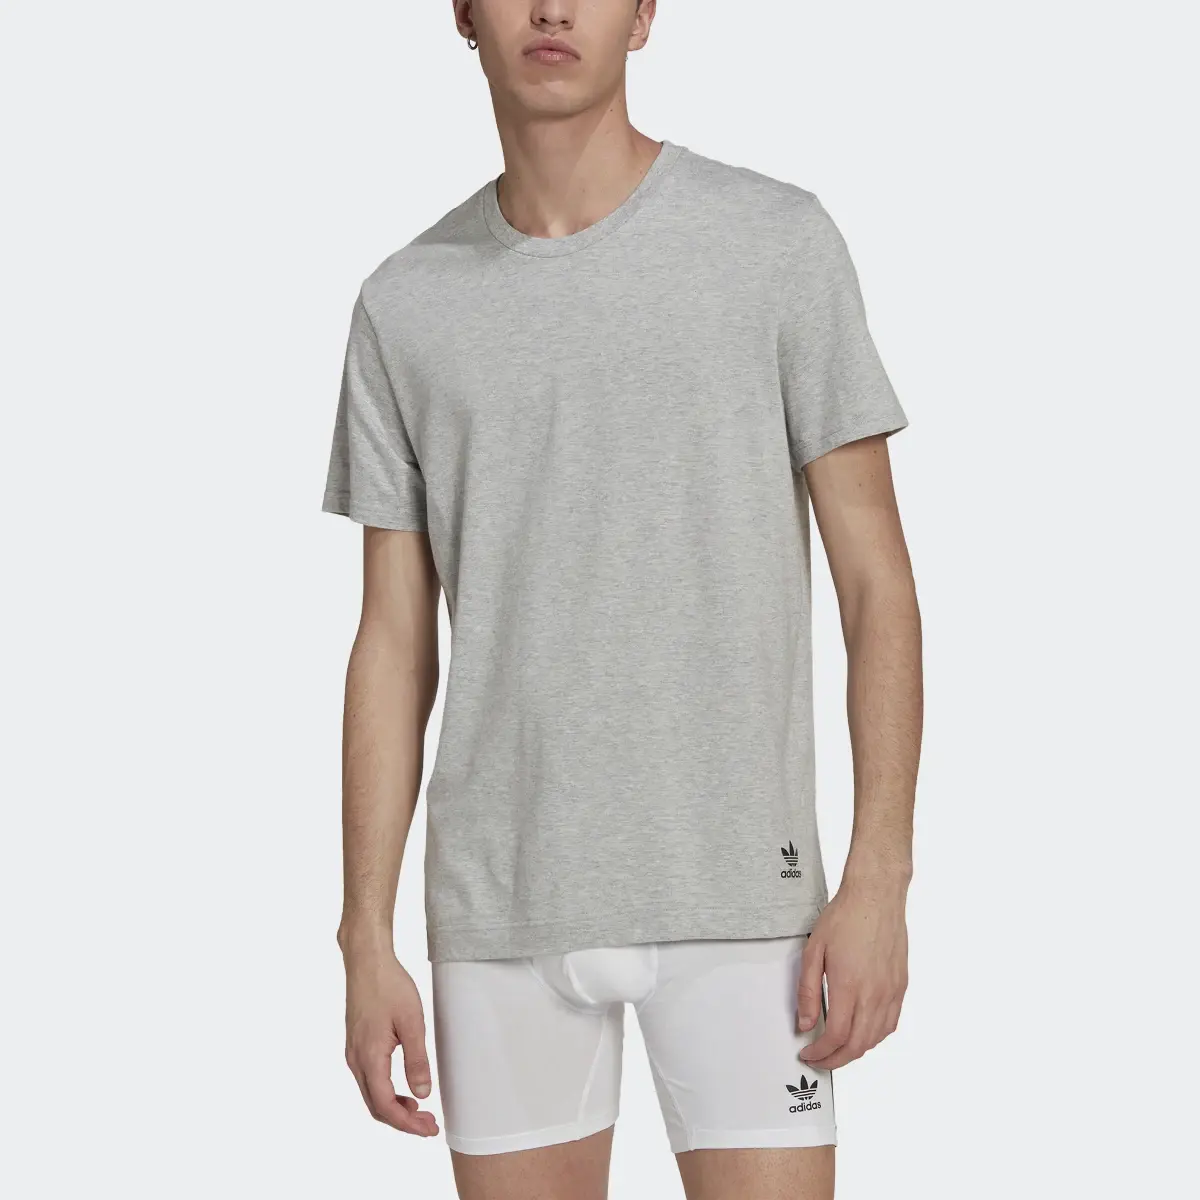 Adidas Comfort Core Cotton Crewneck T-Shirt Underwear. 1